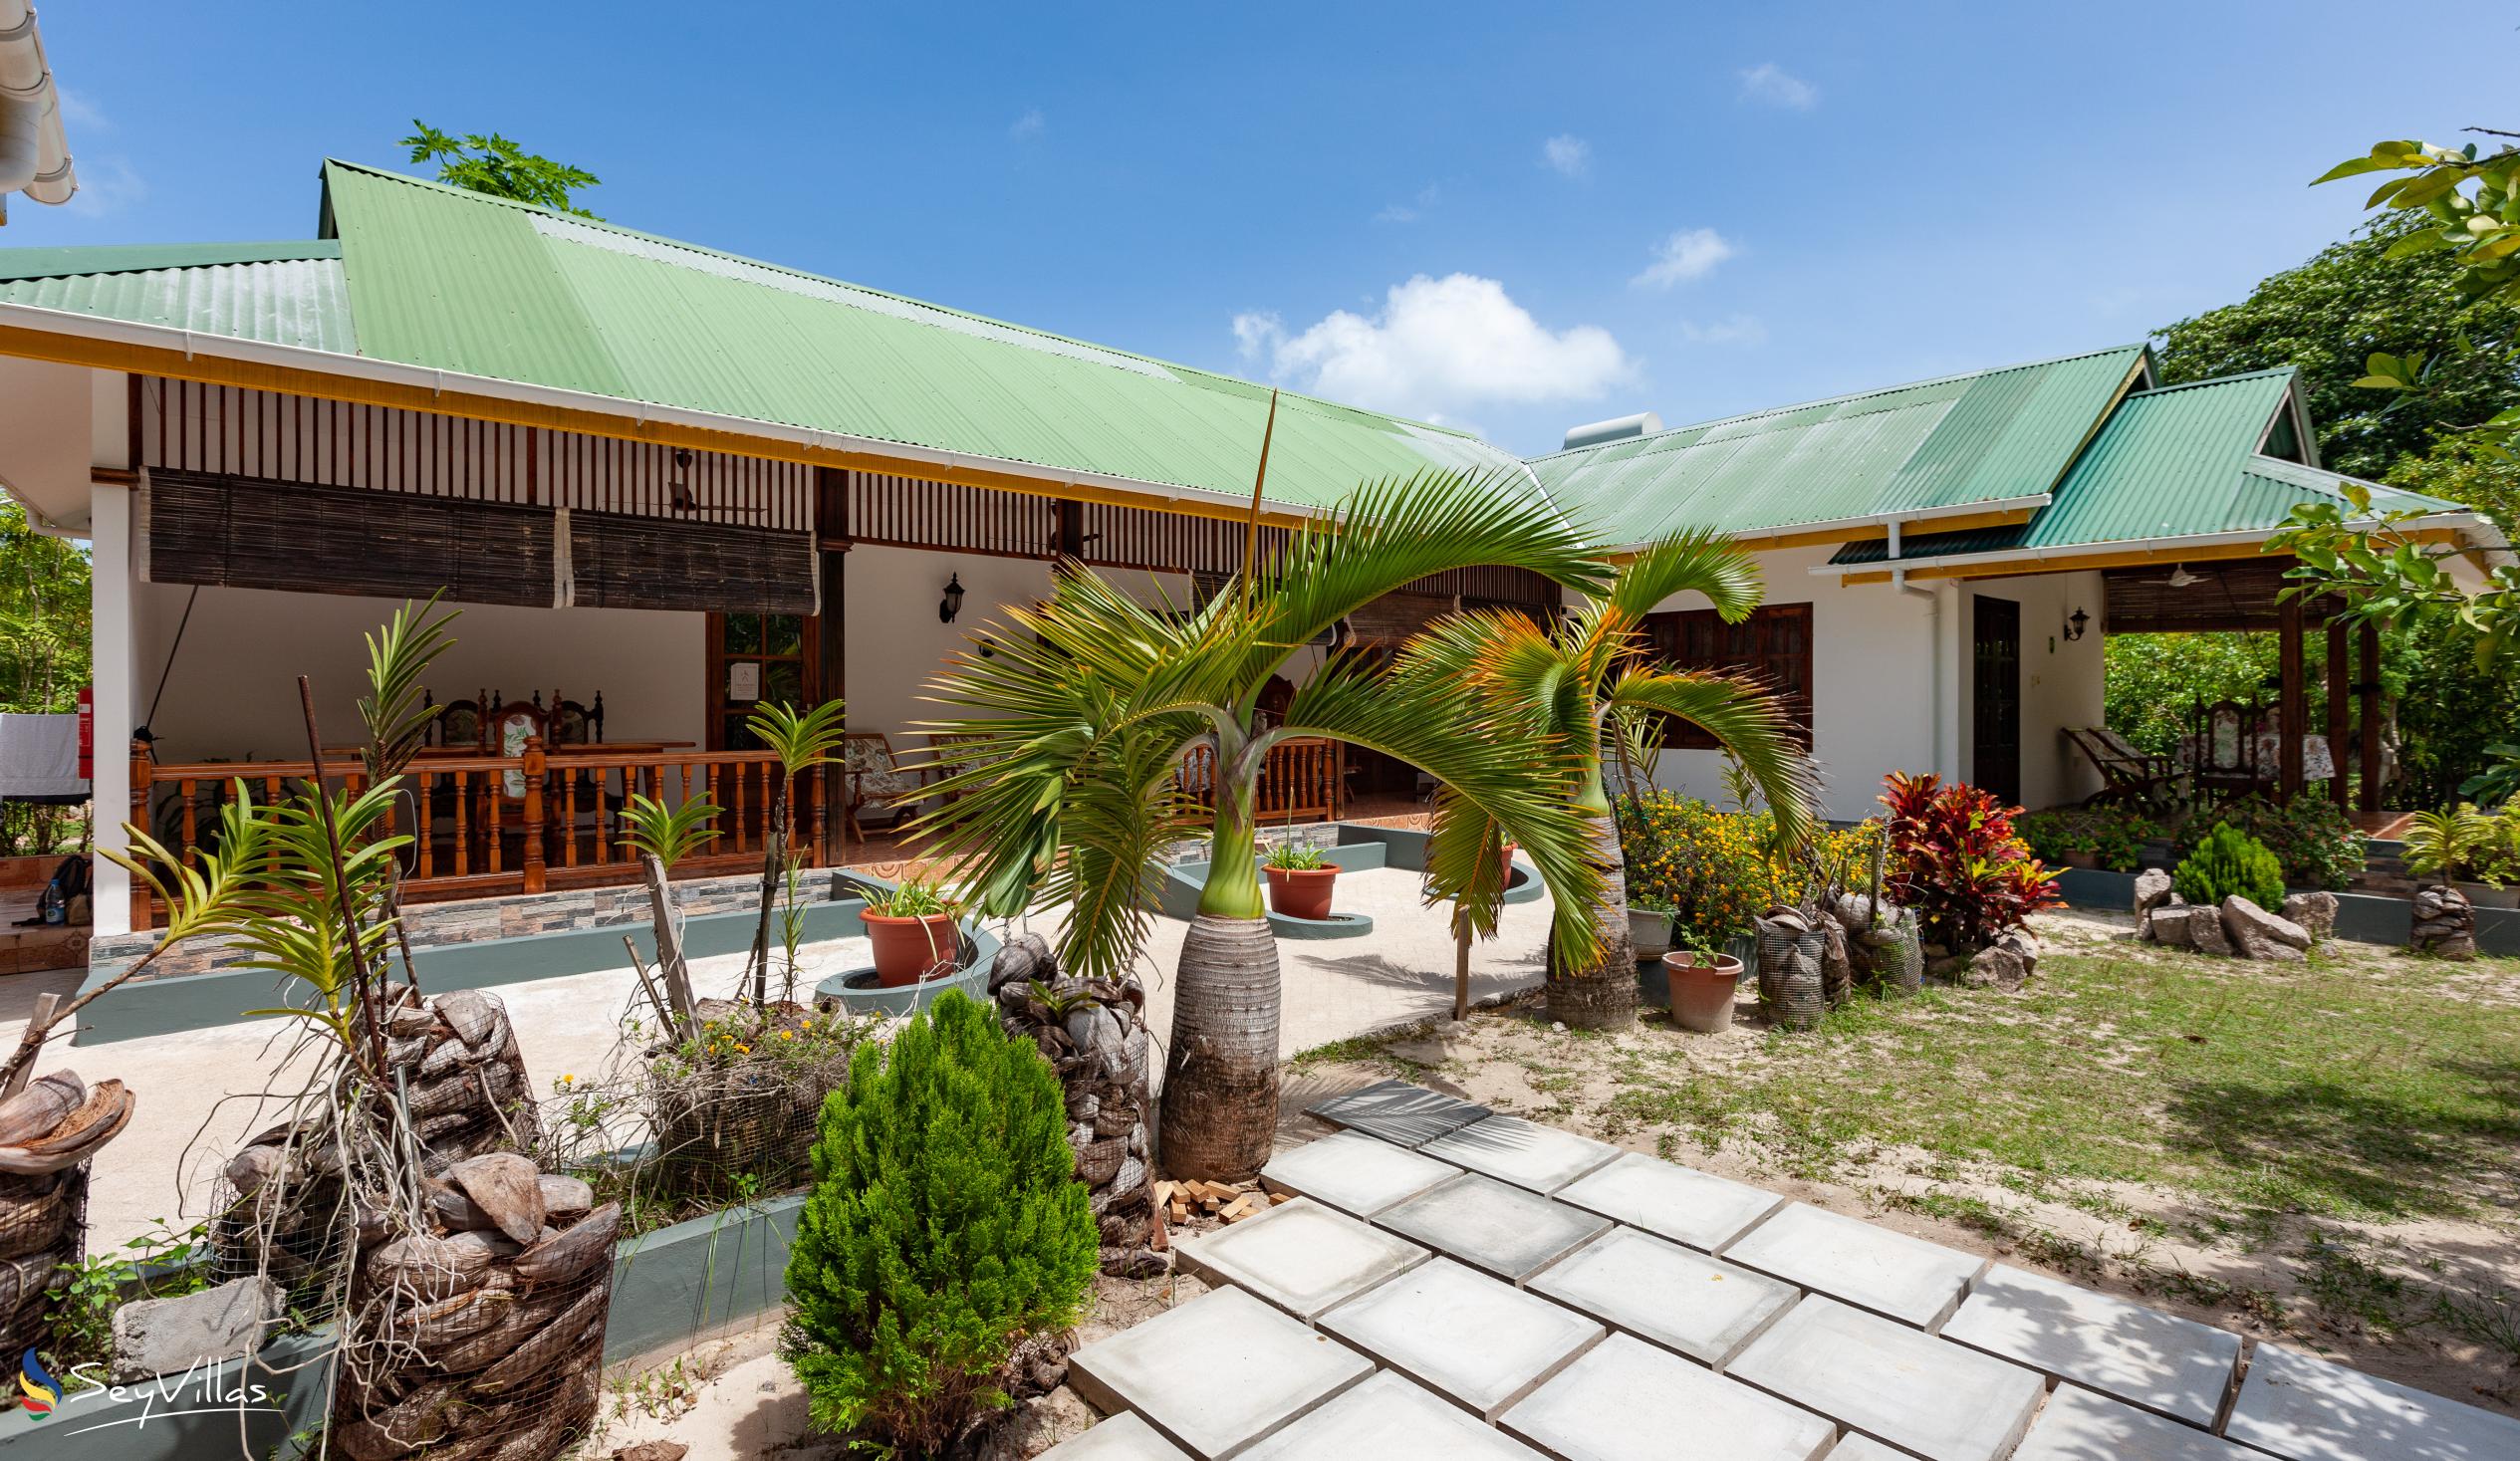 Foto 9: Beryl Guest House - Aussenbereich - La Digue (Seychellen)